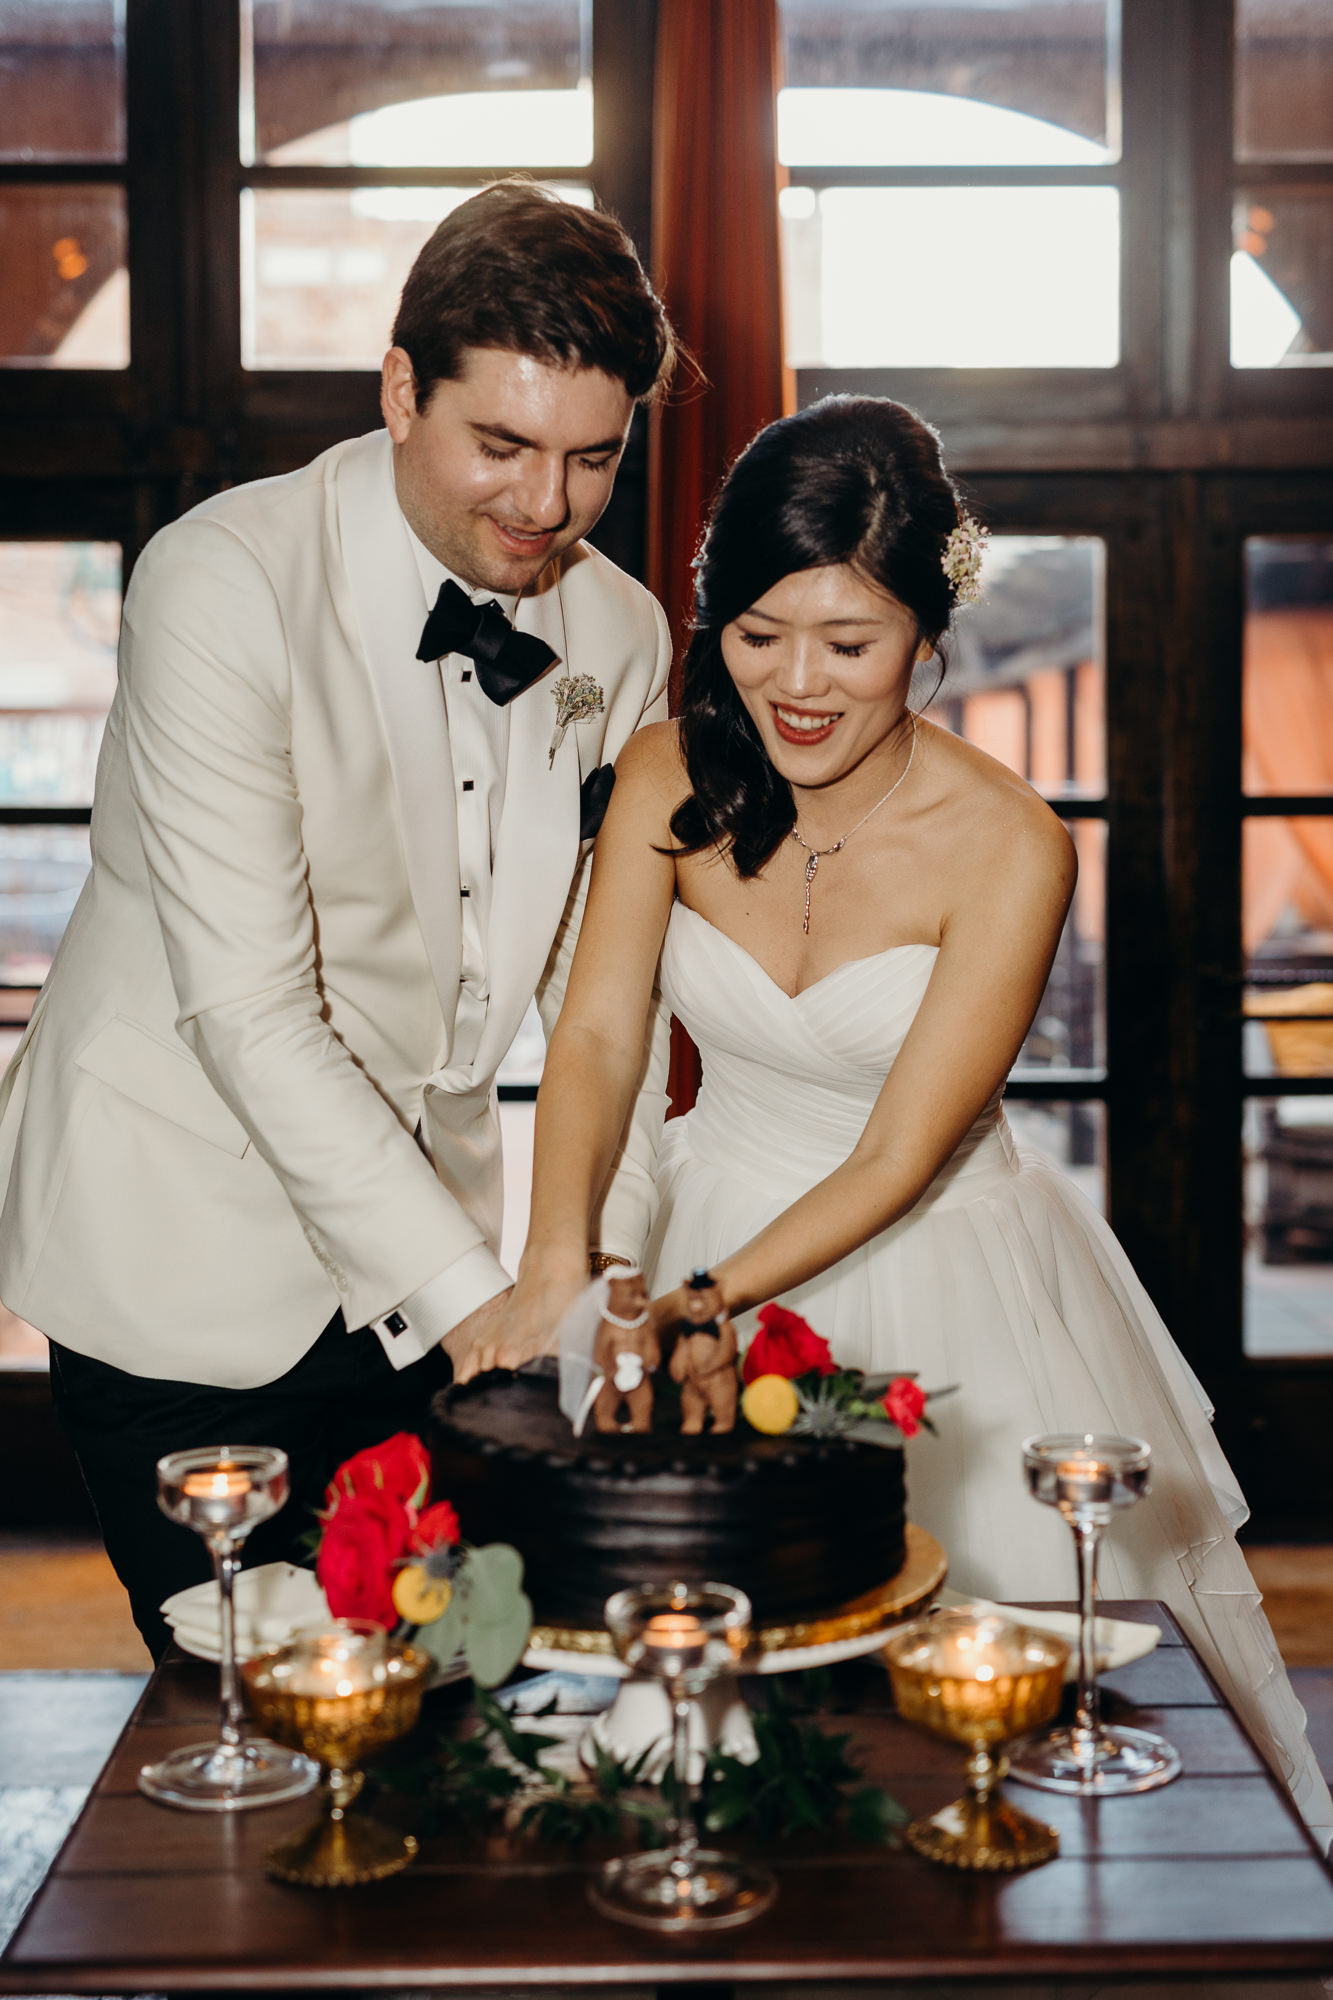 bride and groom cut their wedding cake at mymoon in brooklyn, new york